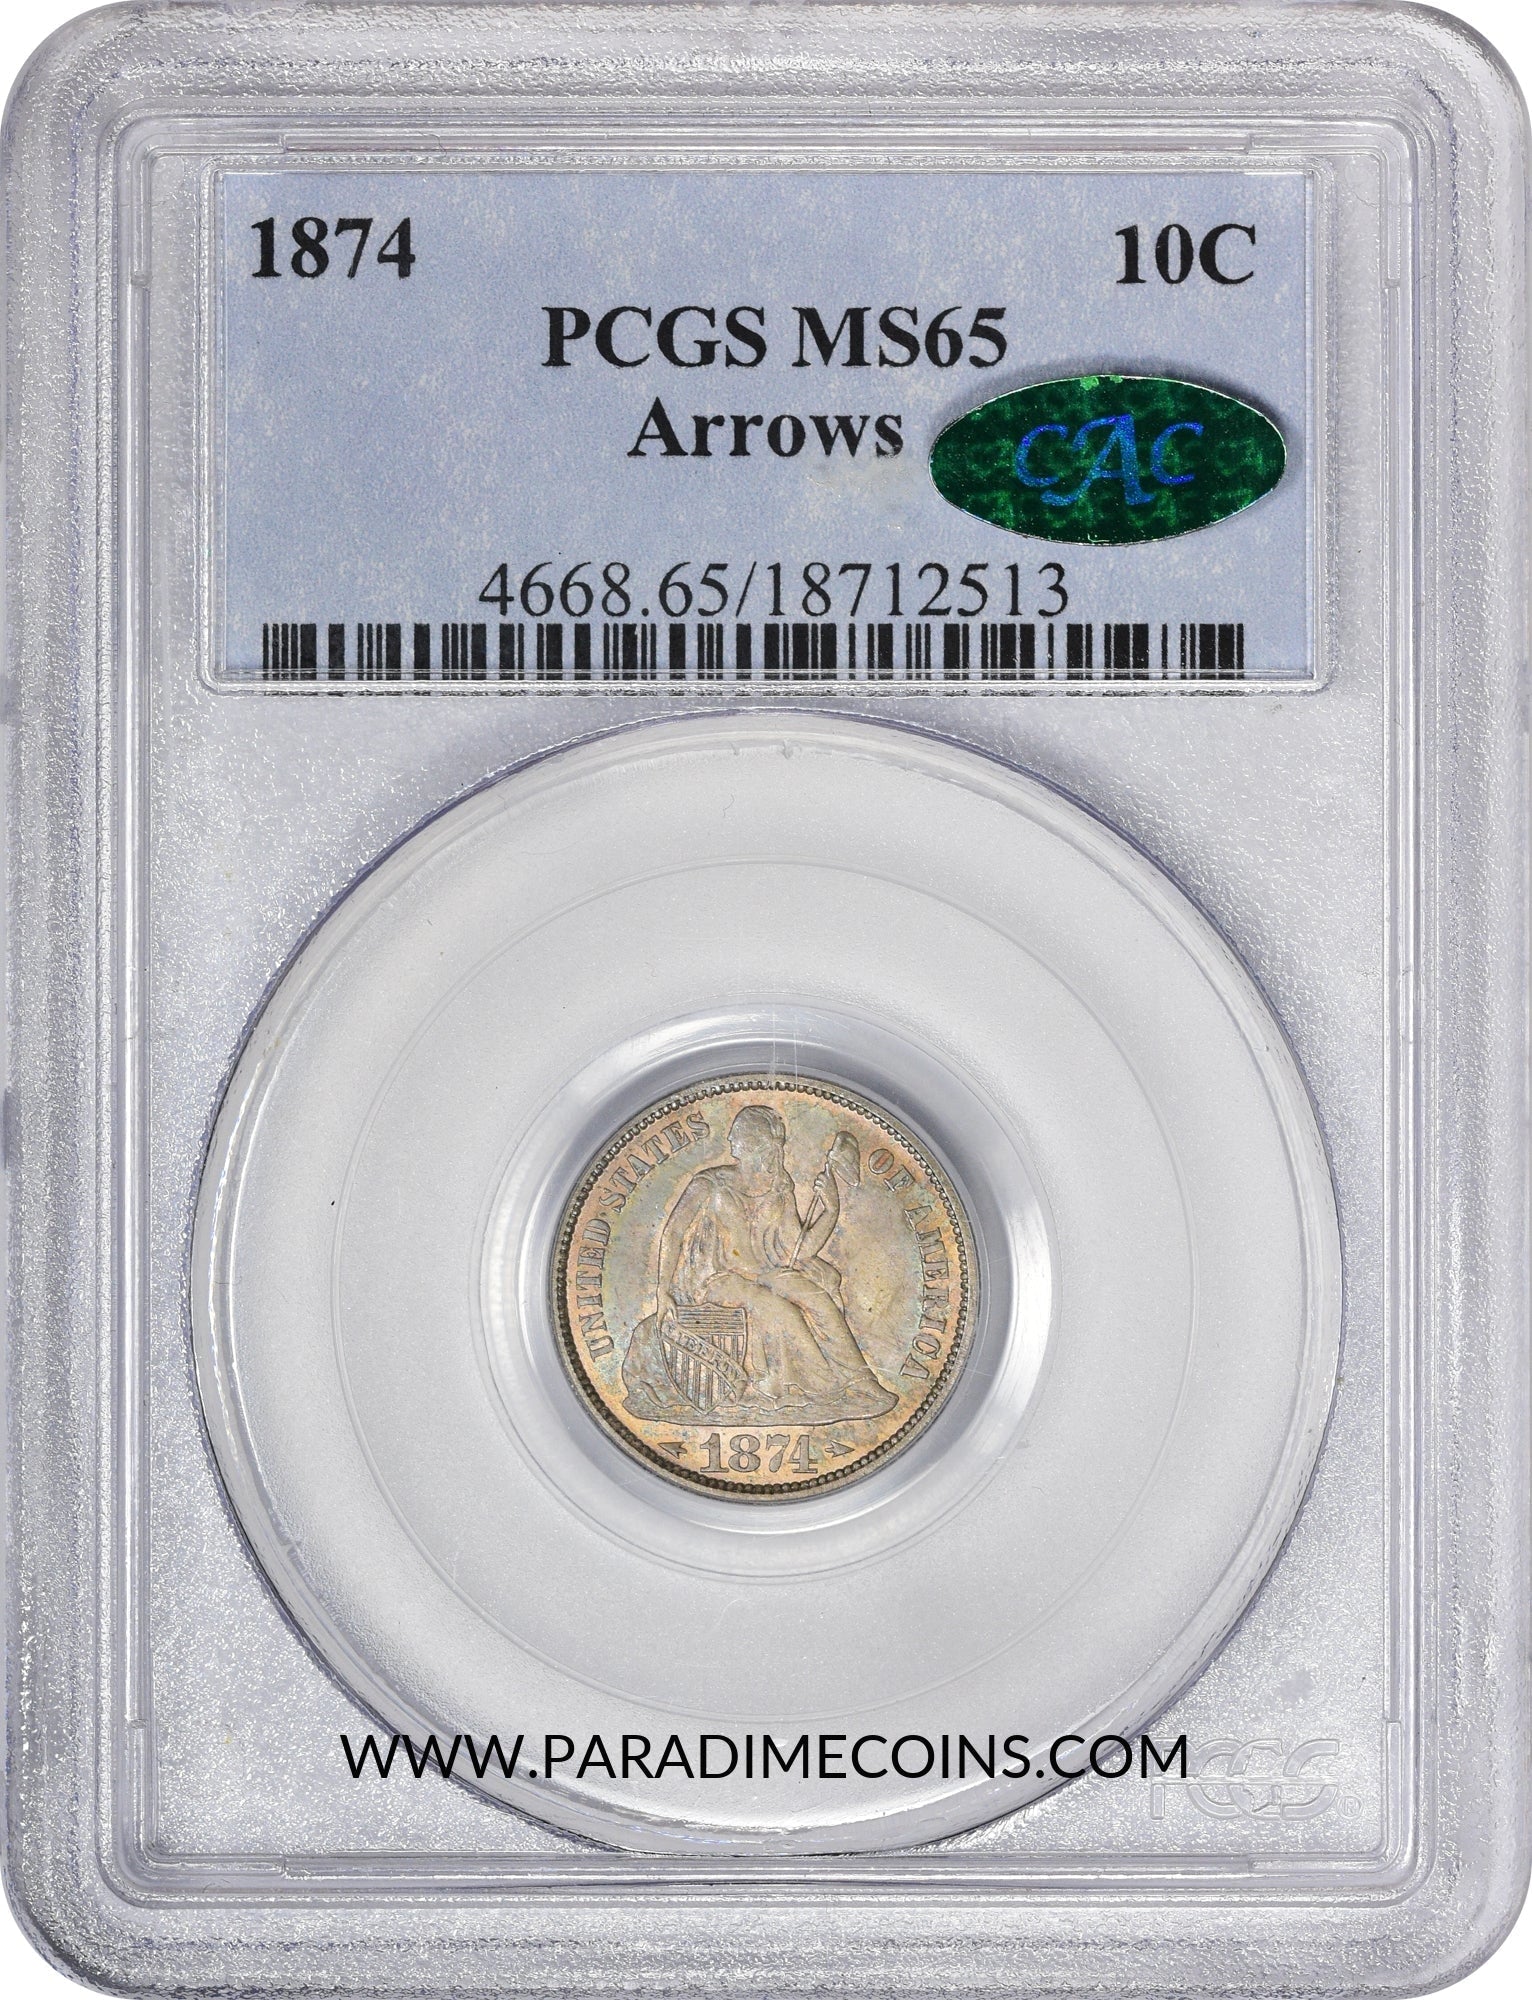 1874 10C ARROWS MS65 PCGS CAC - Paradime Coins | PCGS NGC CACG CAC Rare US Numismatic Coins For Sale